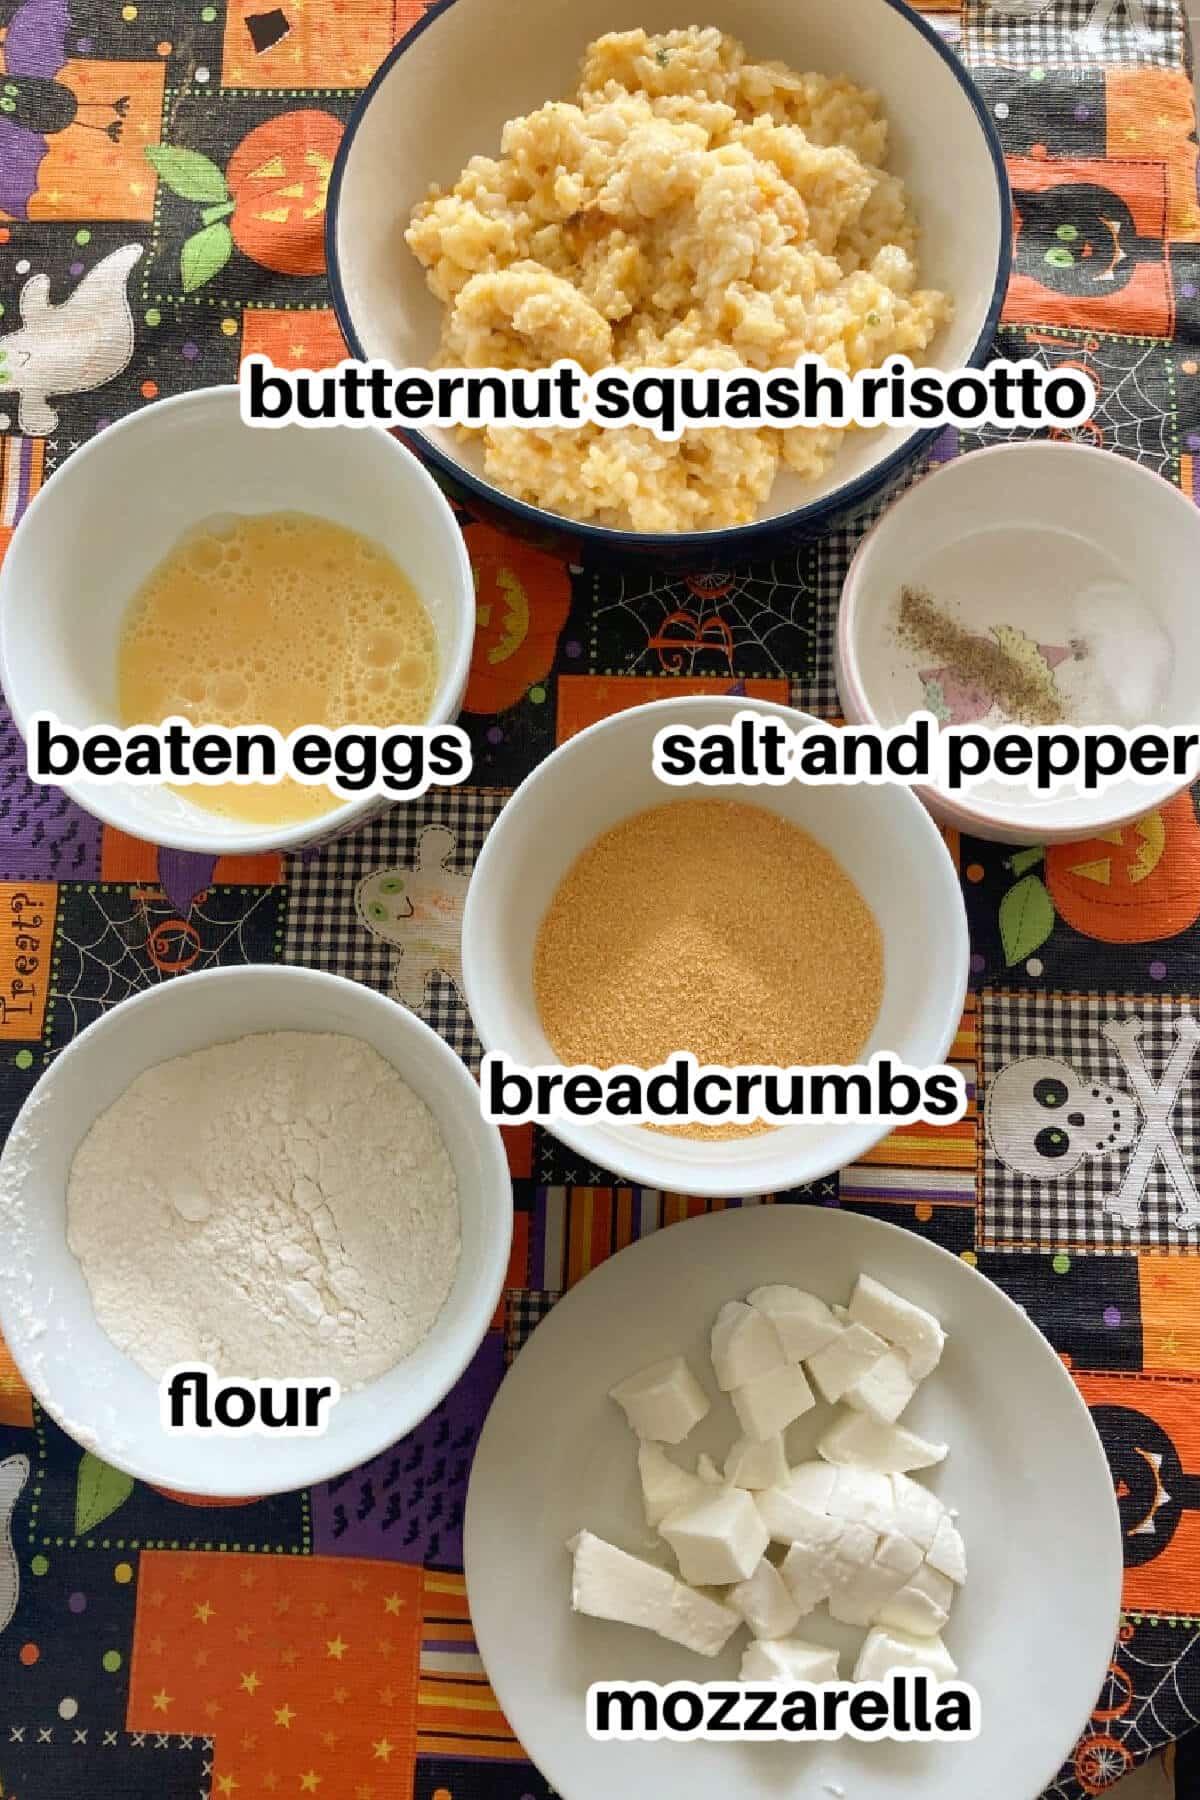 Ingredients needed to make butternut squash arancini.